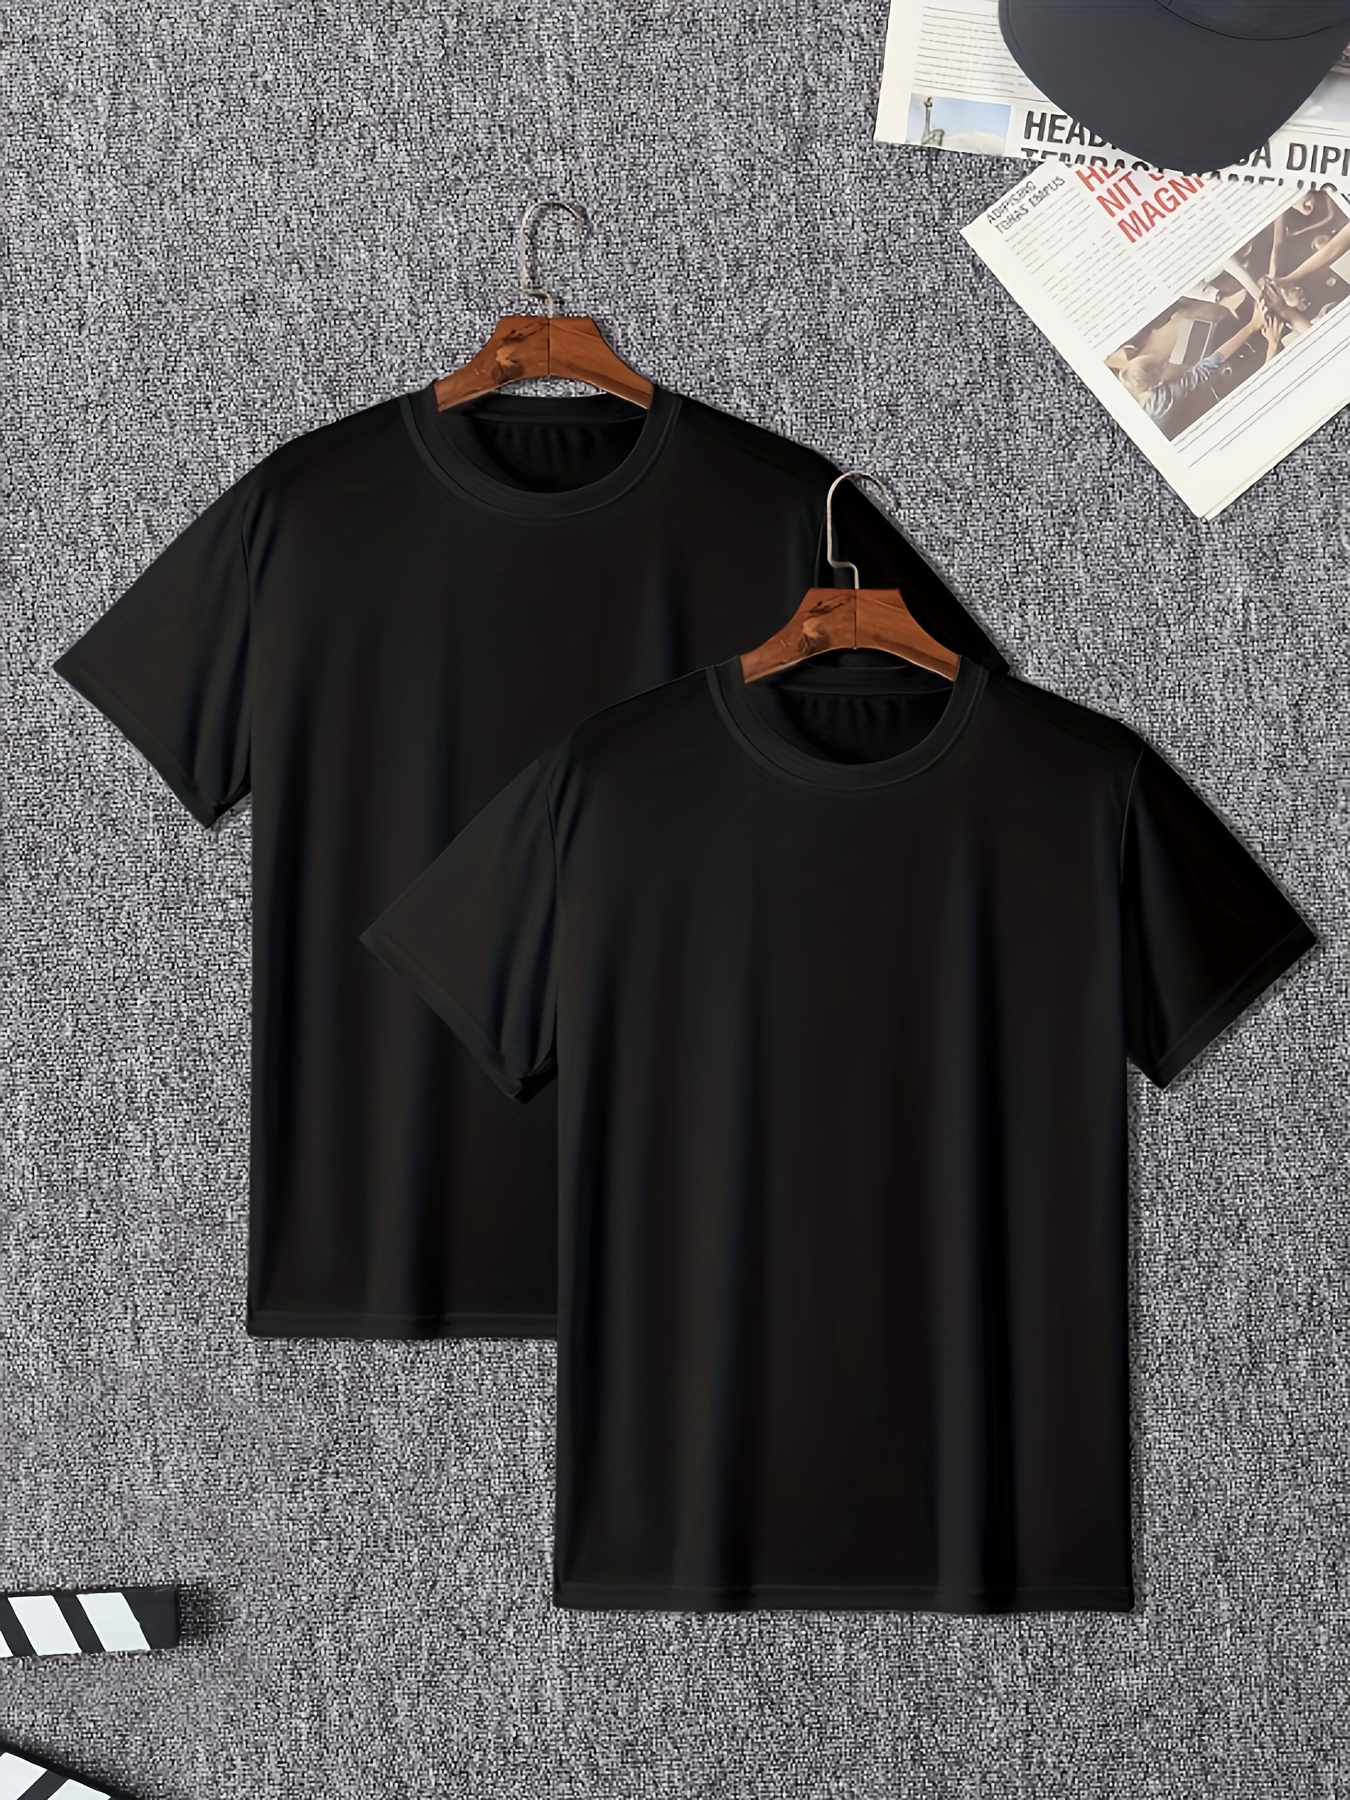 PLUS SIZE Men's NAUTICA Print T-Shirt, Comfy Stretchable Casual Crew Neck  Tops, Men's Clothing